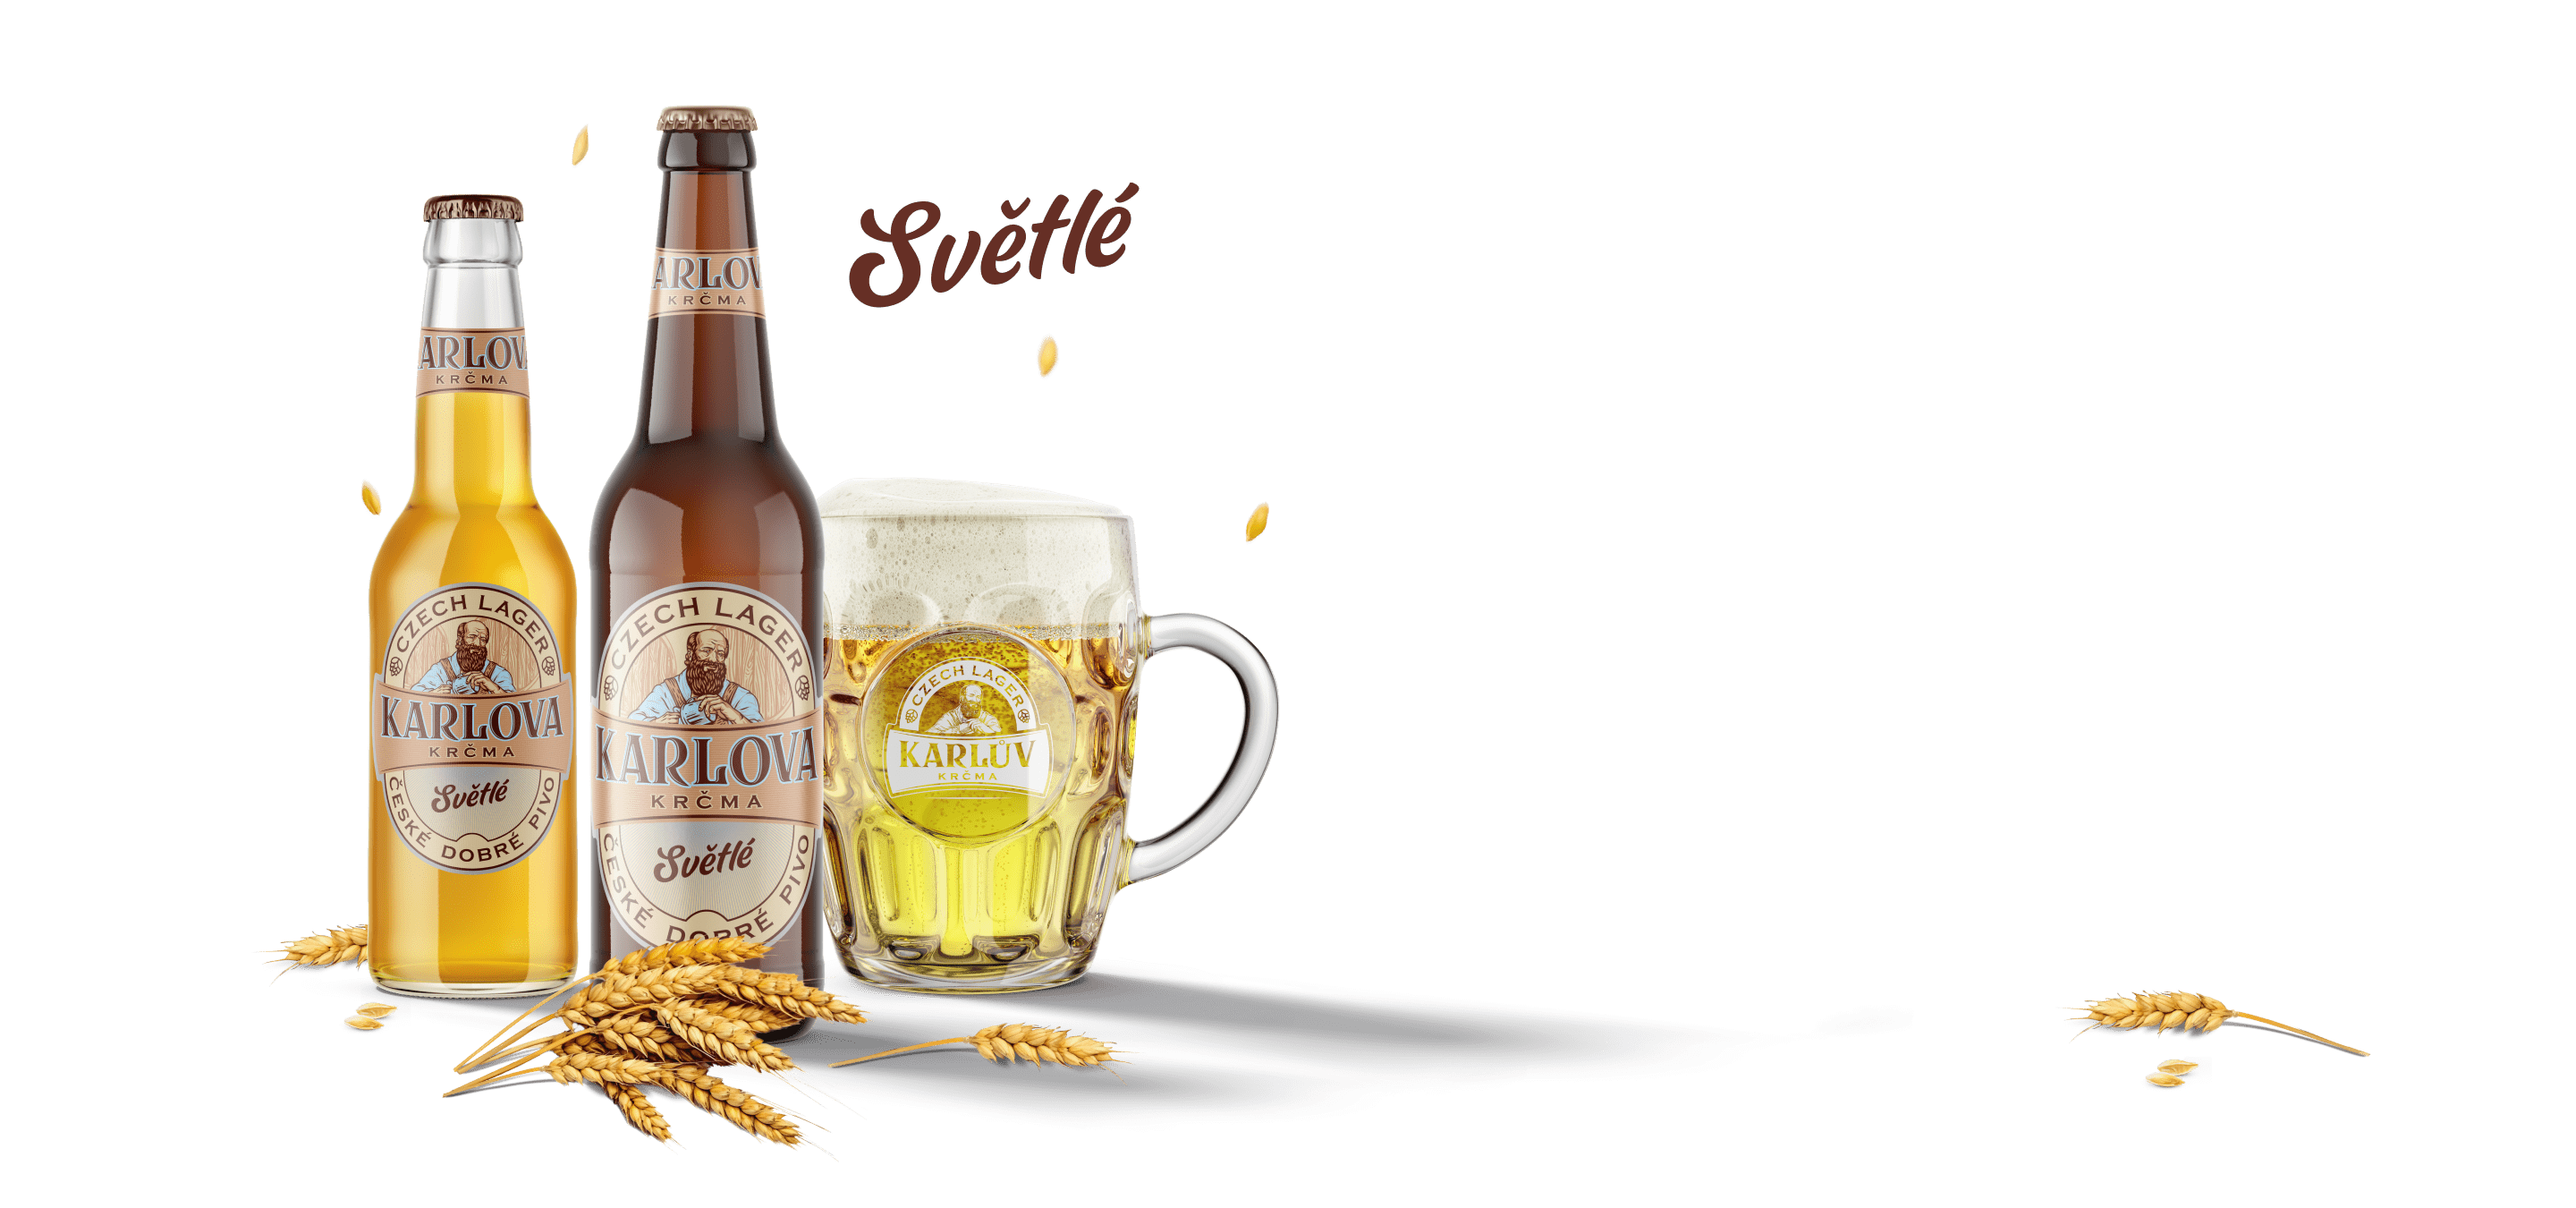 Svetly Chezski beer